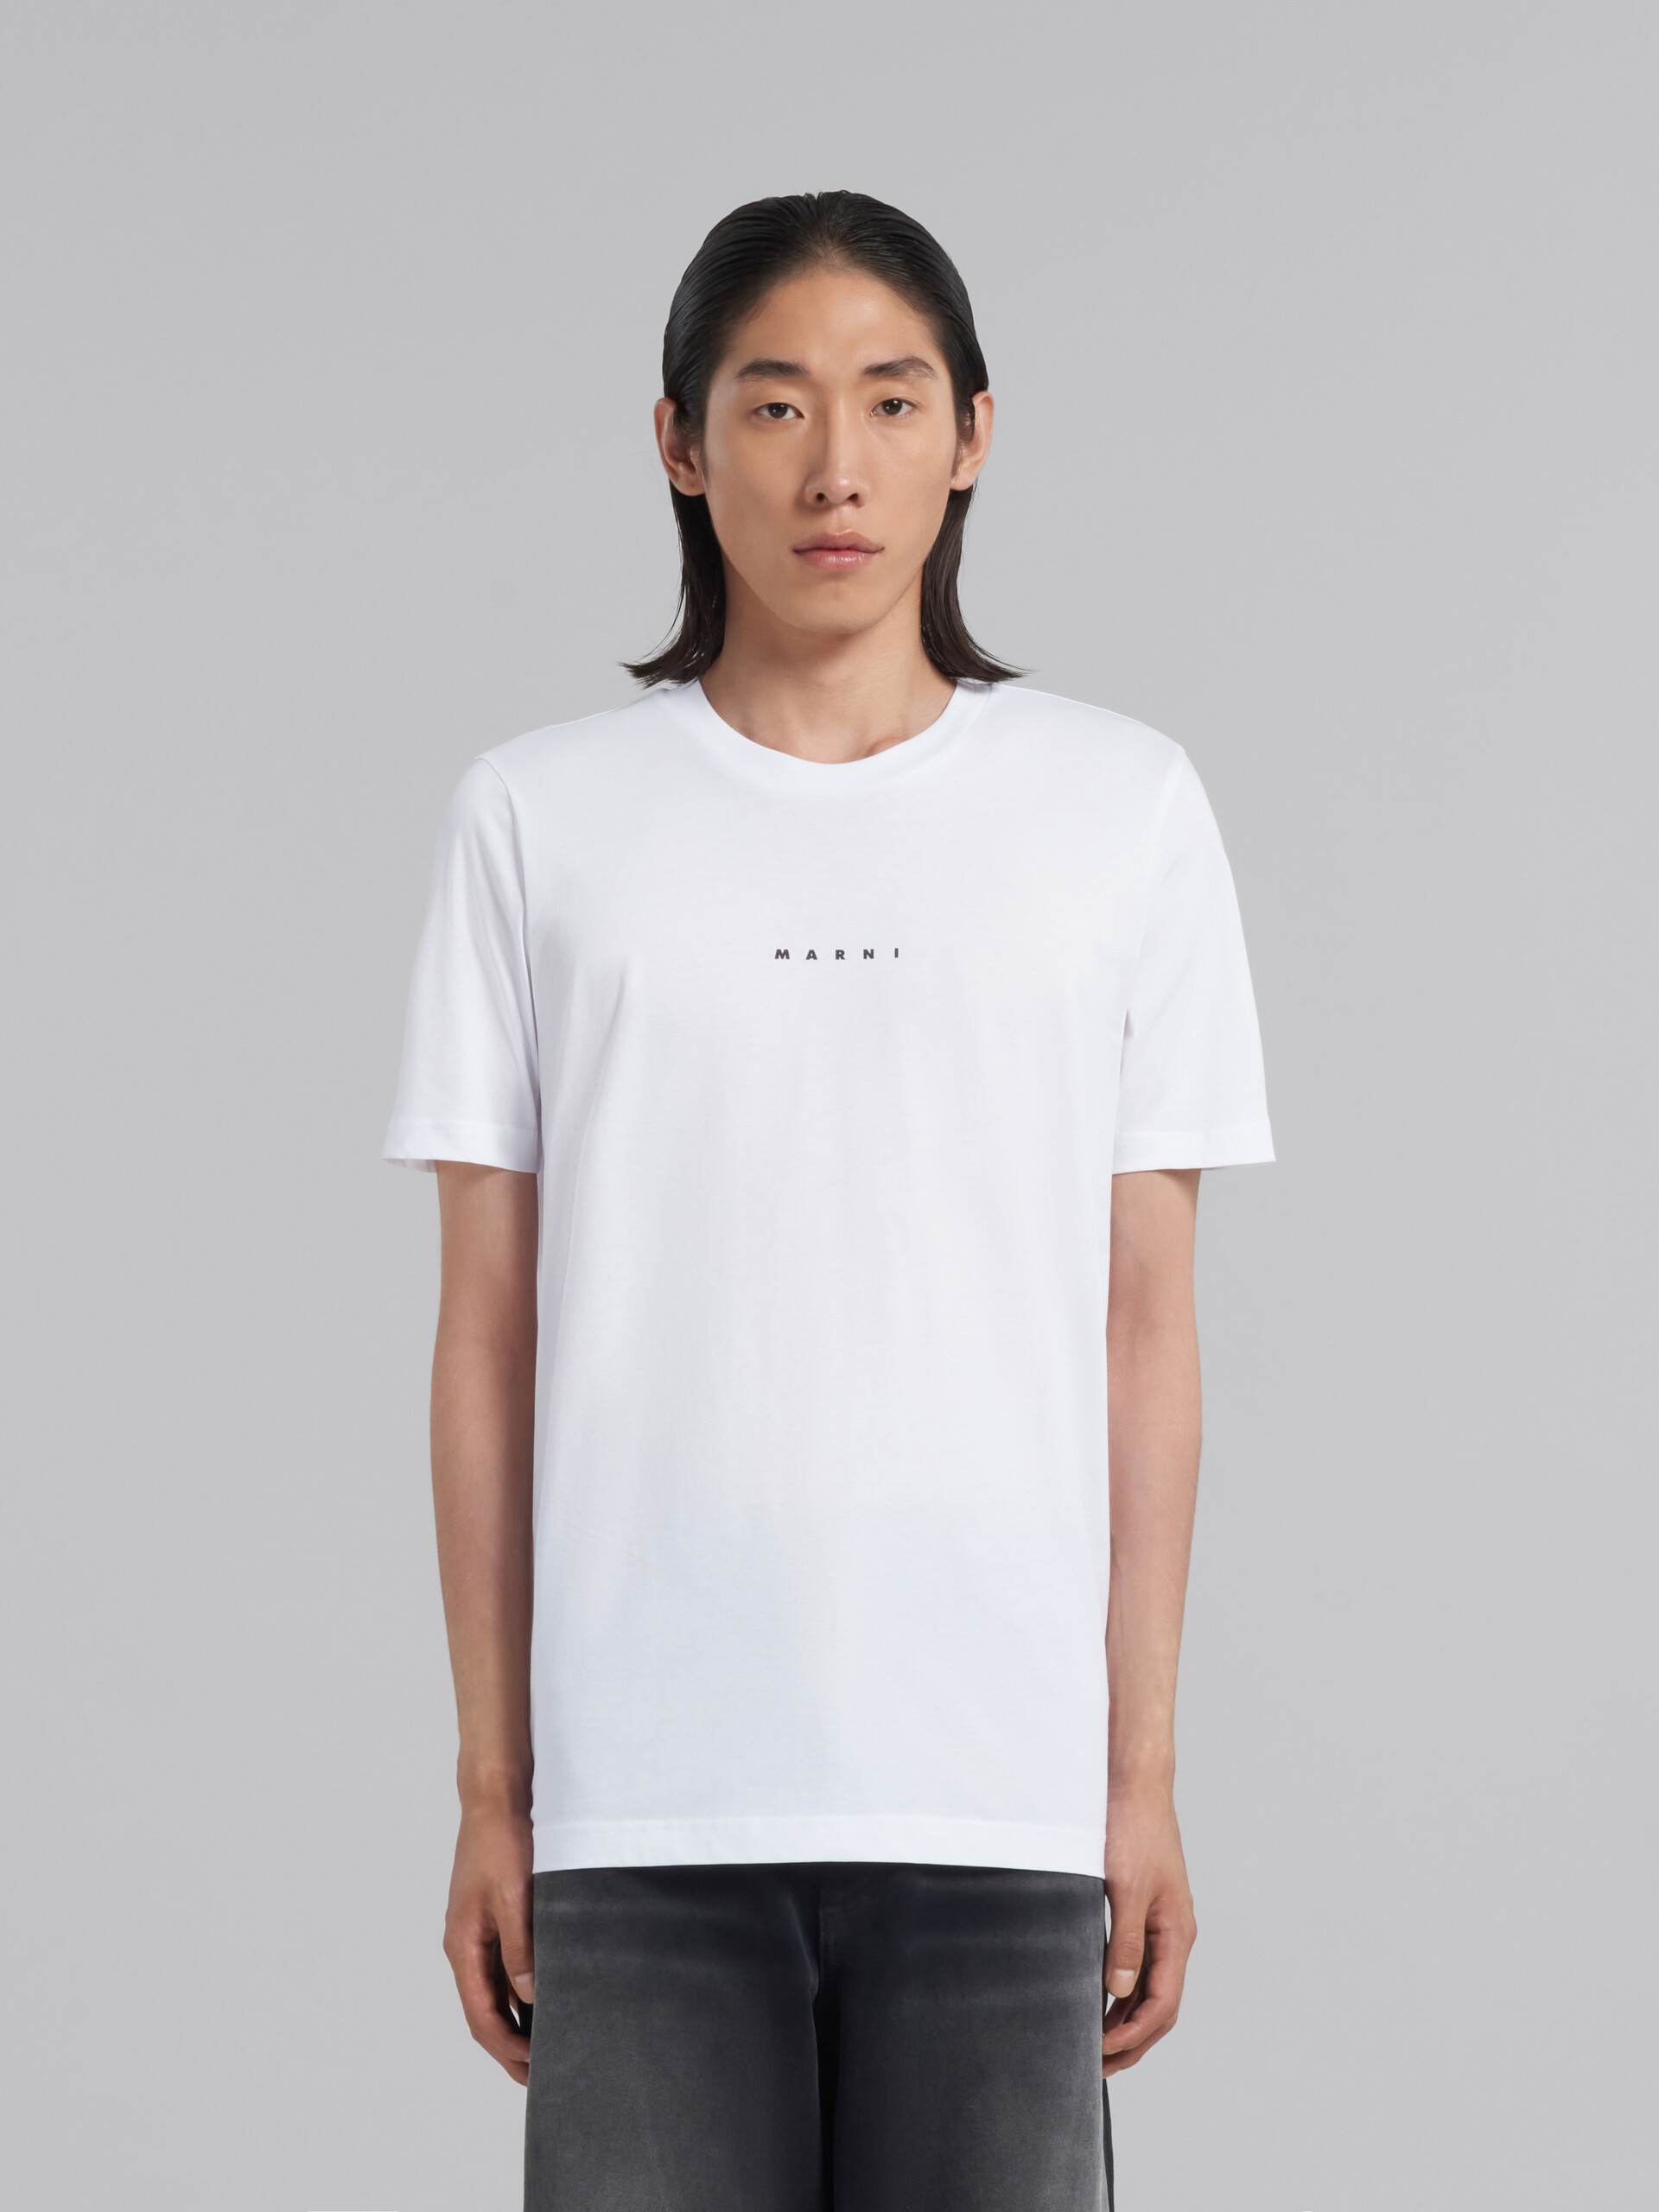 MARNI マルニ 半袖 プリント Tシャツ ホワイト サイズ 50 (L)